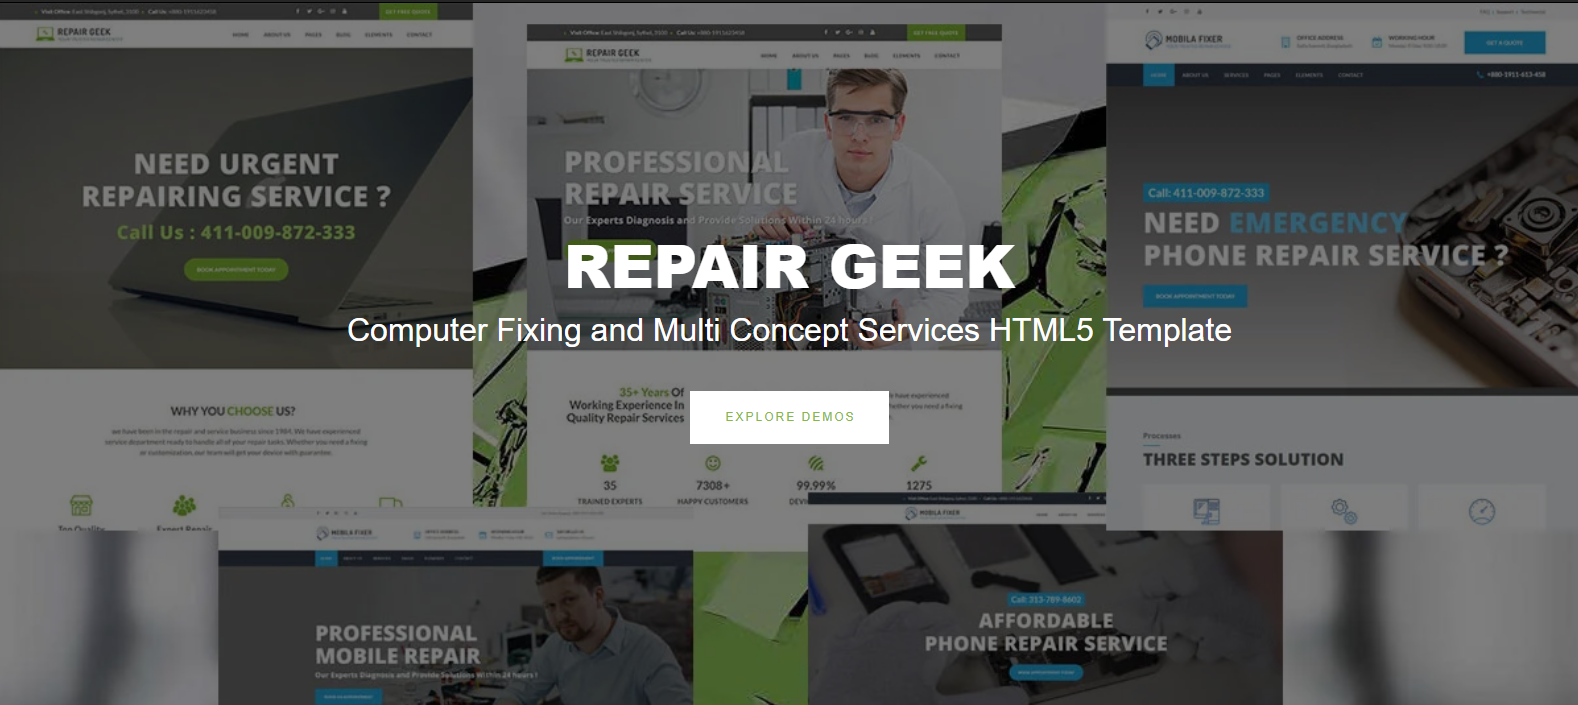 Repair Geek - Laptop And Computer Fixing Service Center HTML5 Template